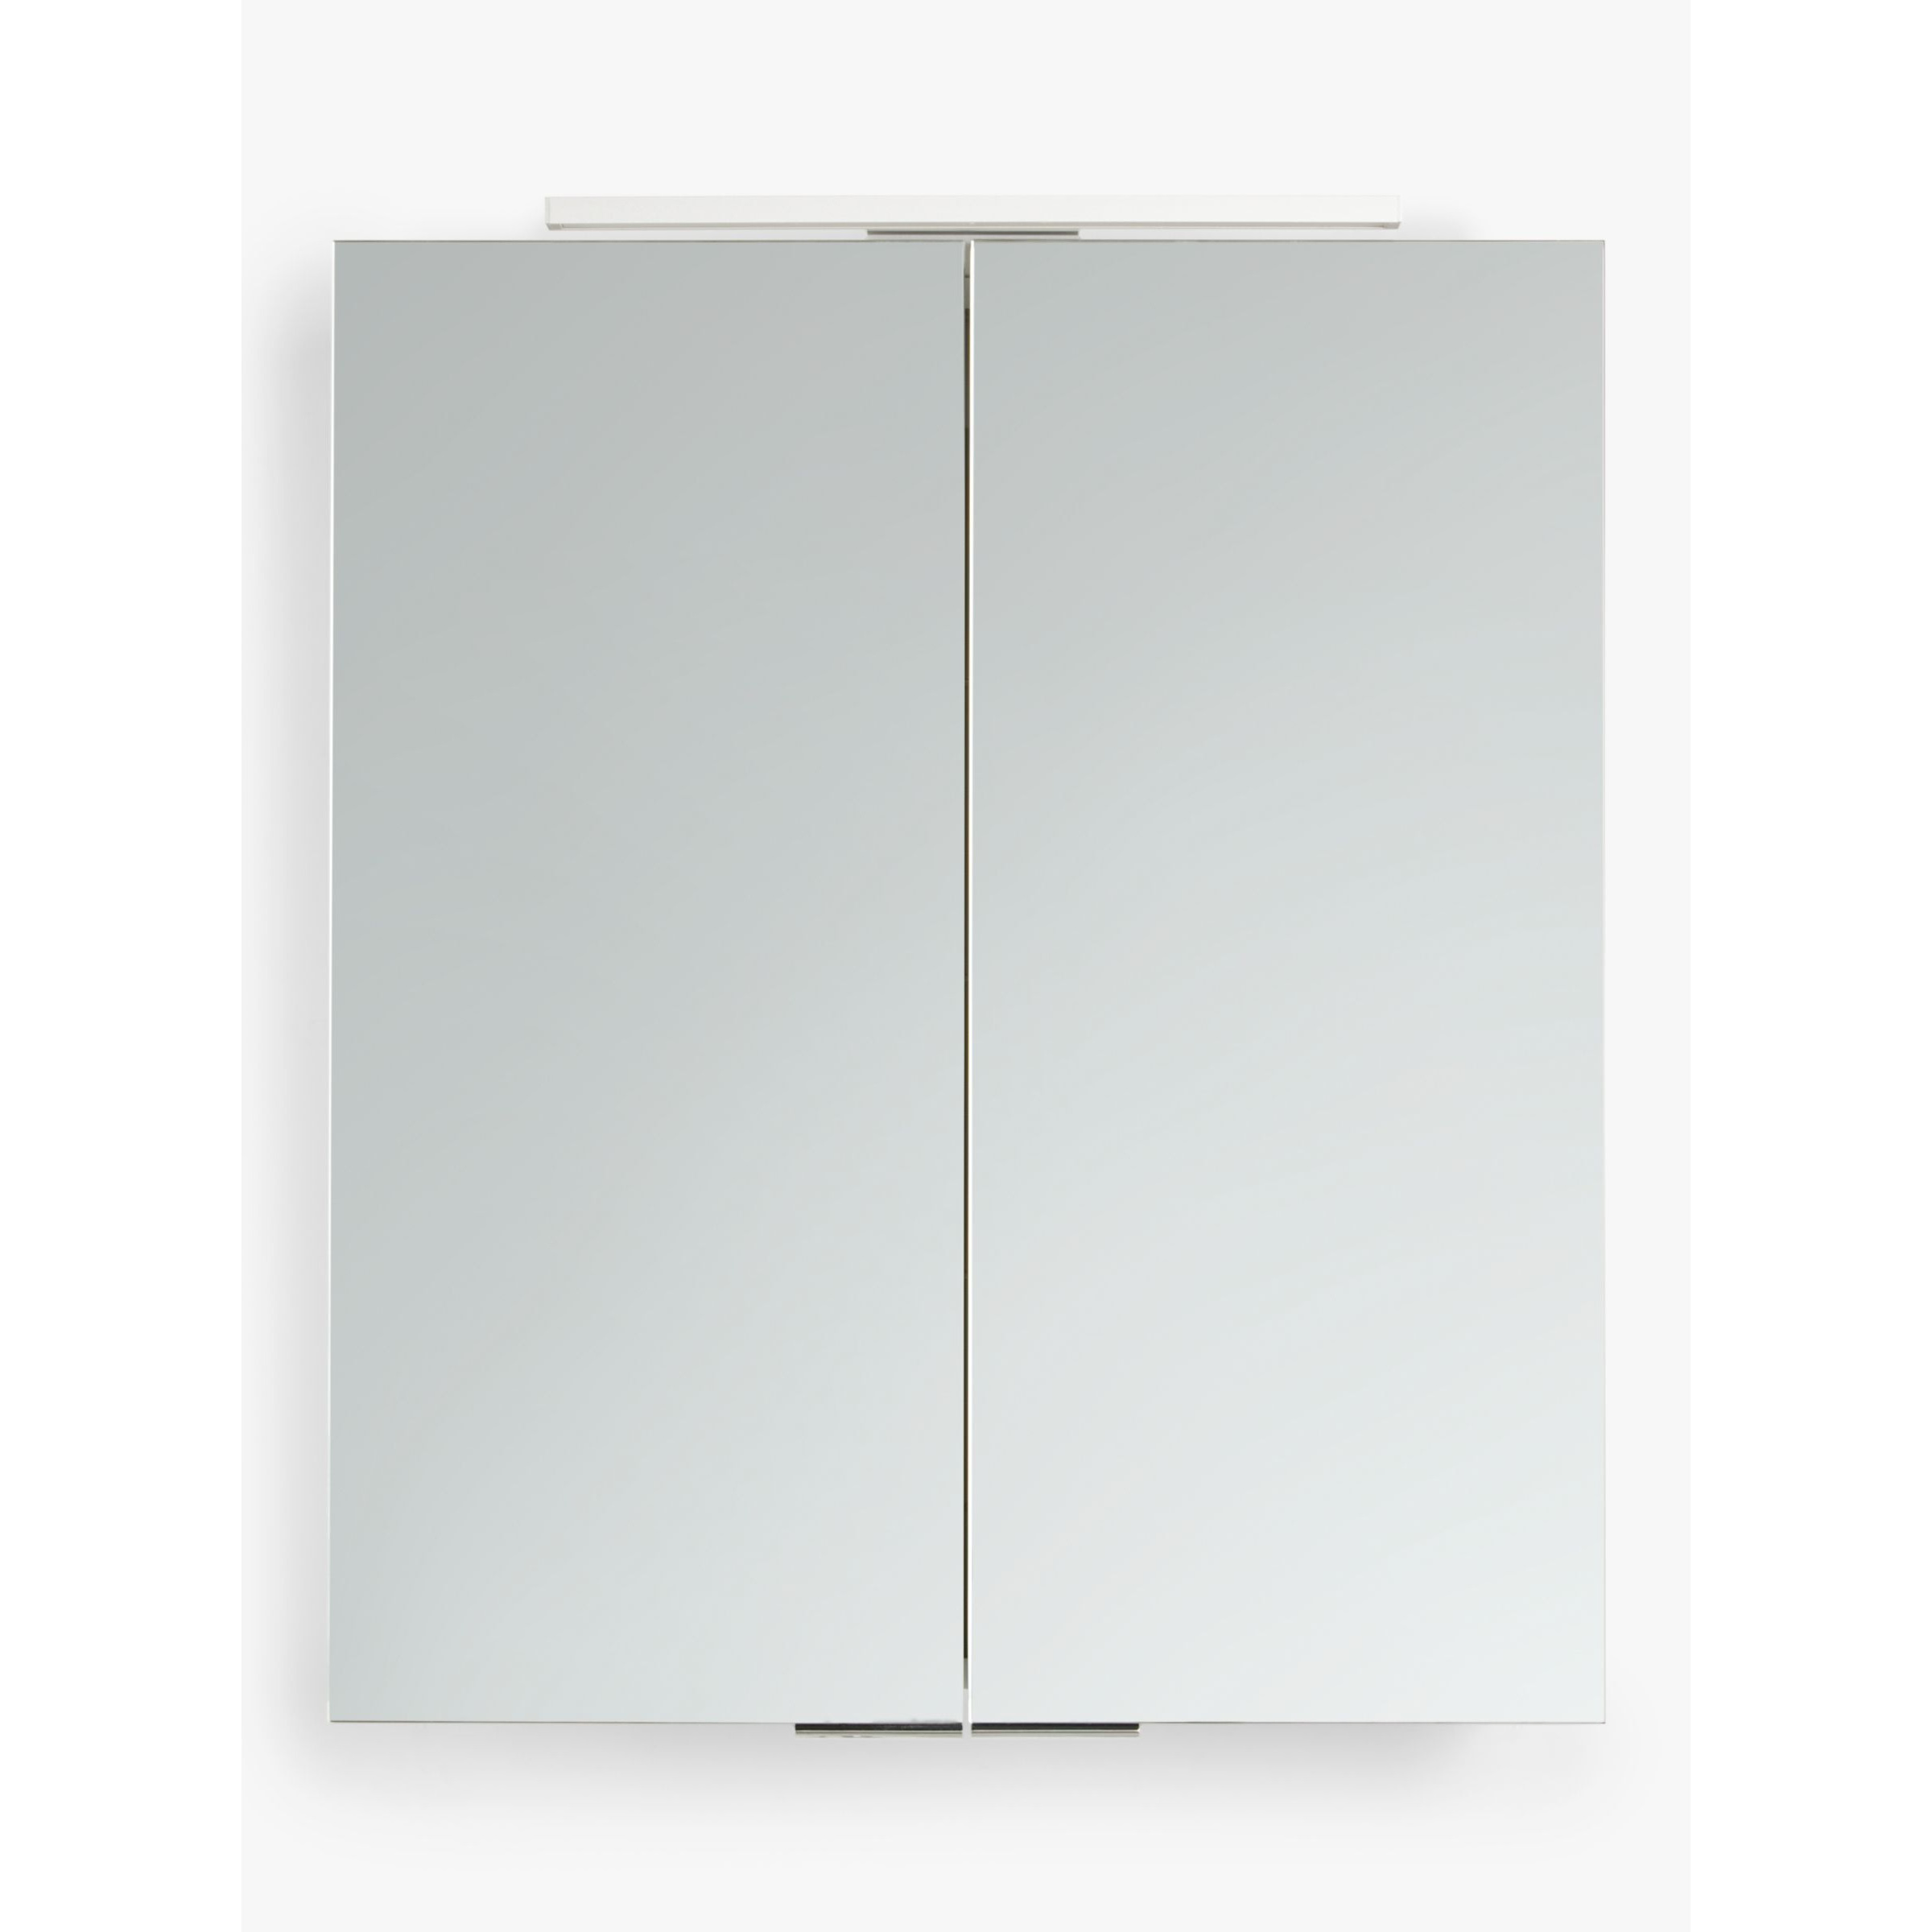 John Lewis Ariel Double Mirrored and Illuminated Bathroom Cabinet - image 1